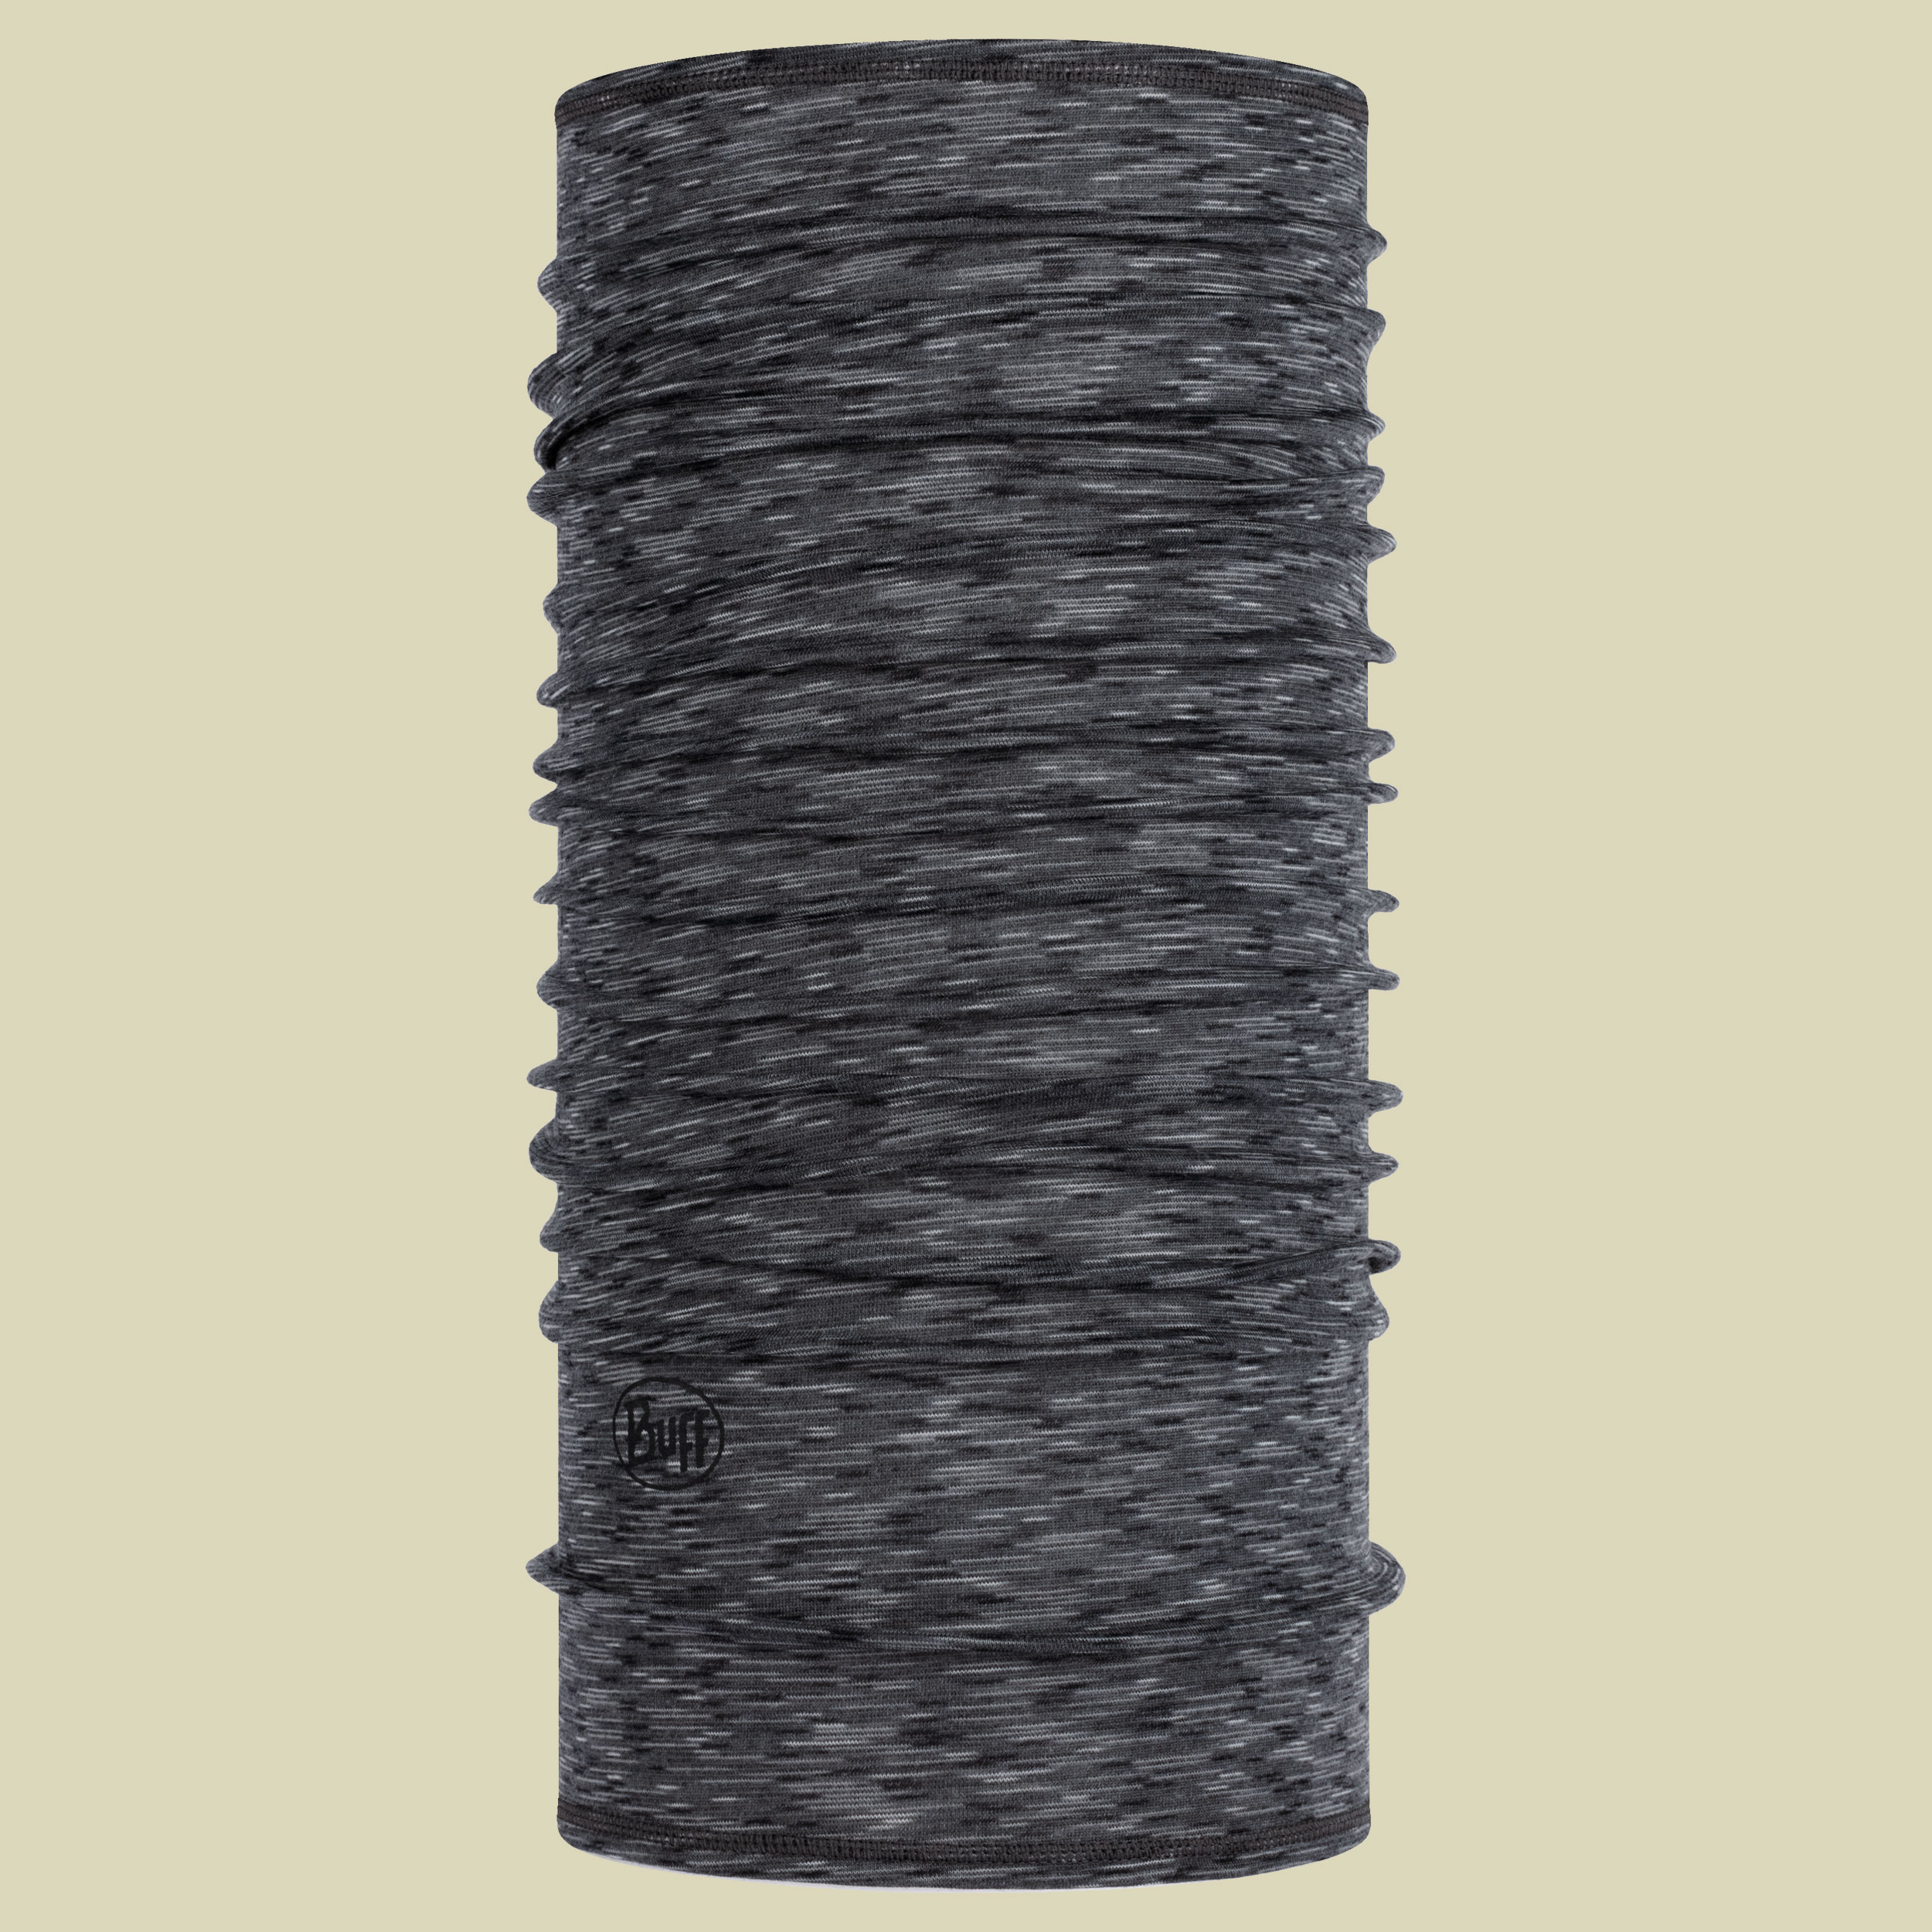 Lightweight Merino Wool Patterned & Stripes Größe regular Farbe graphite multi stripes